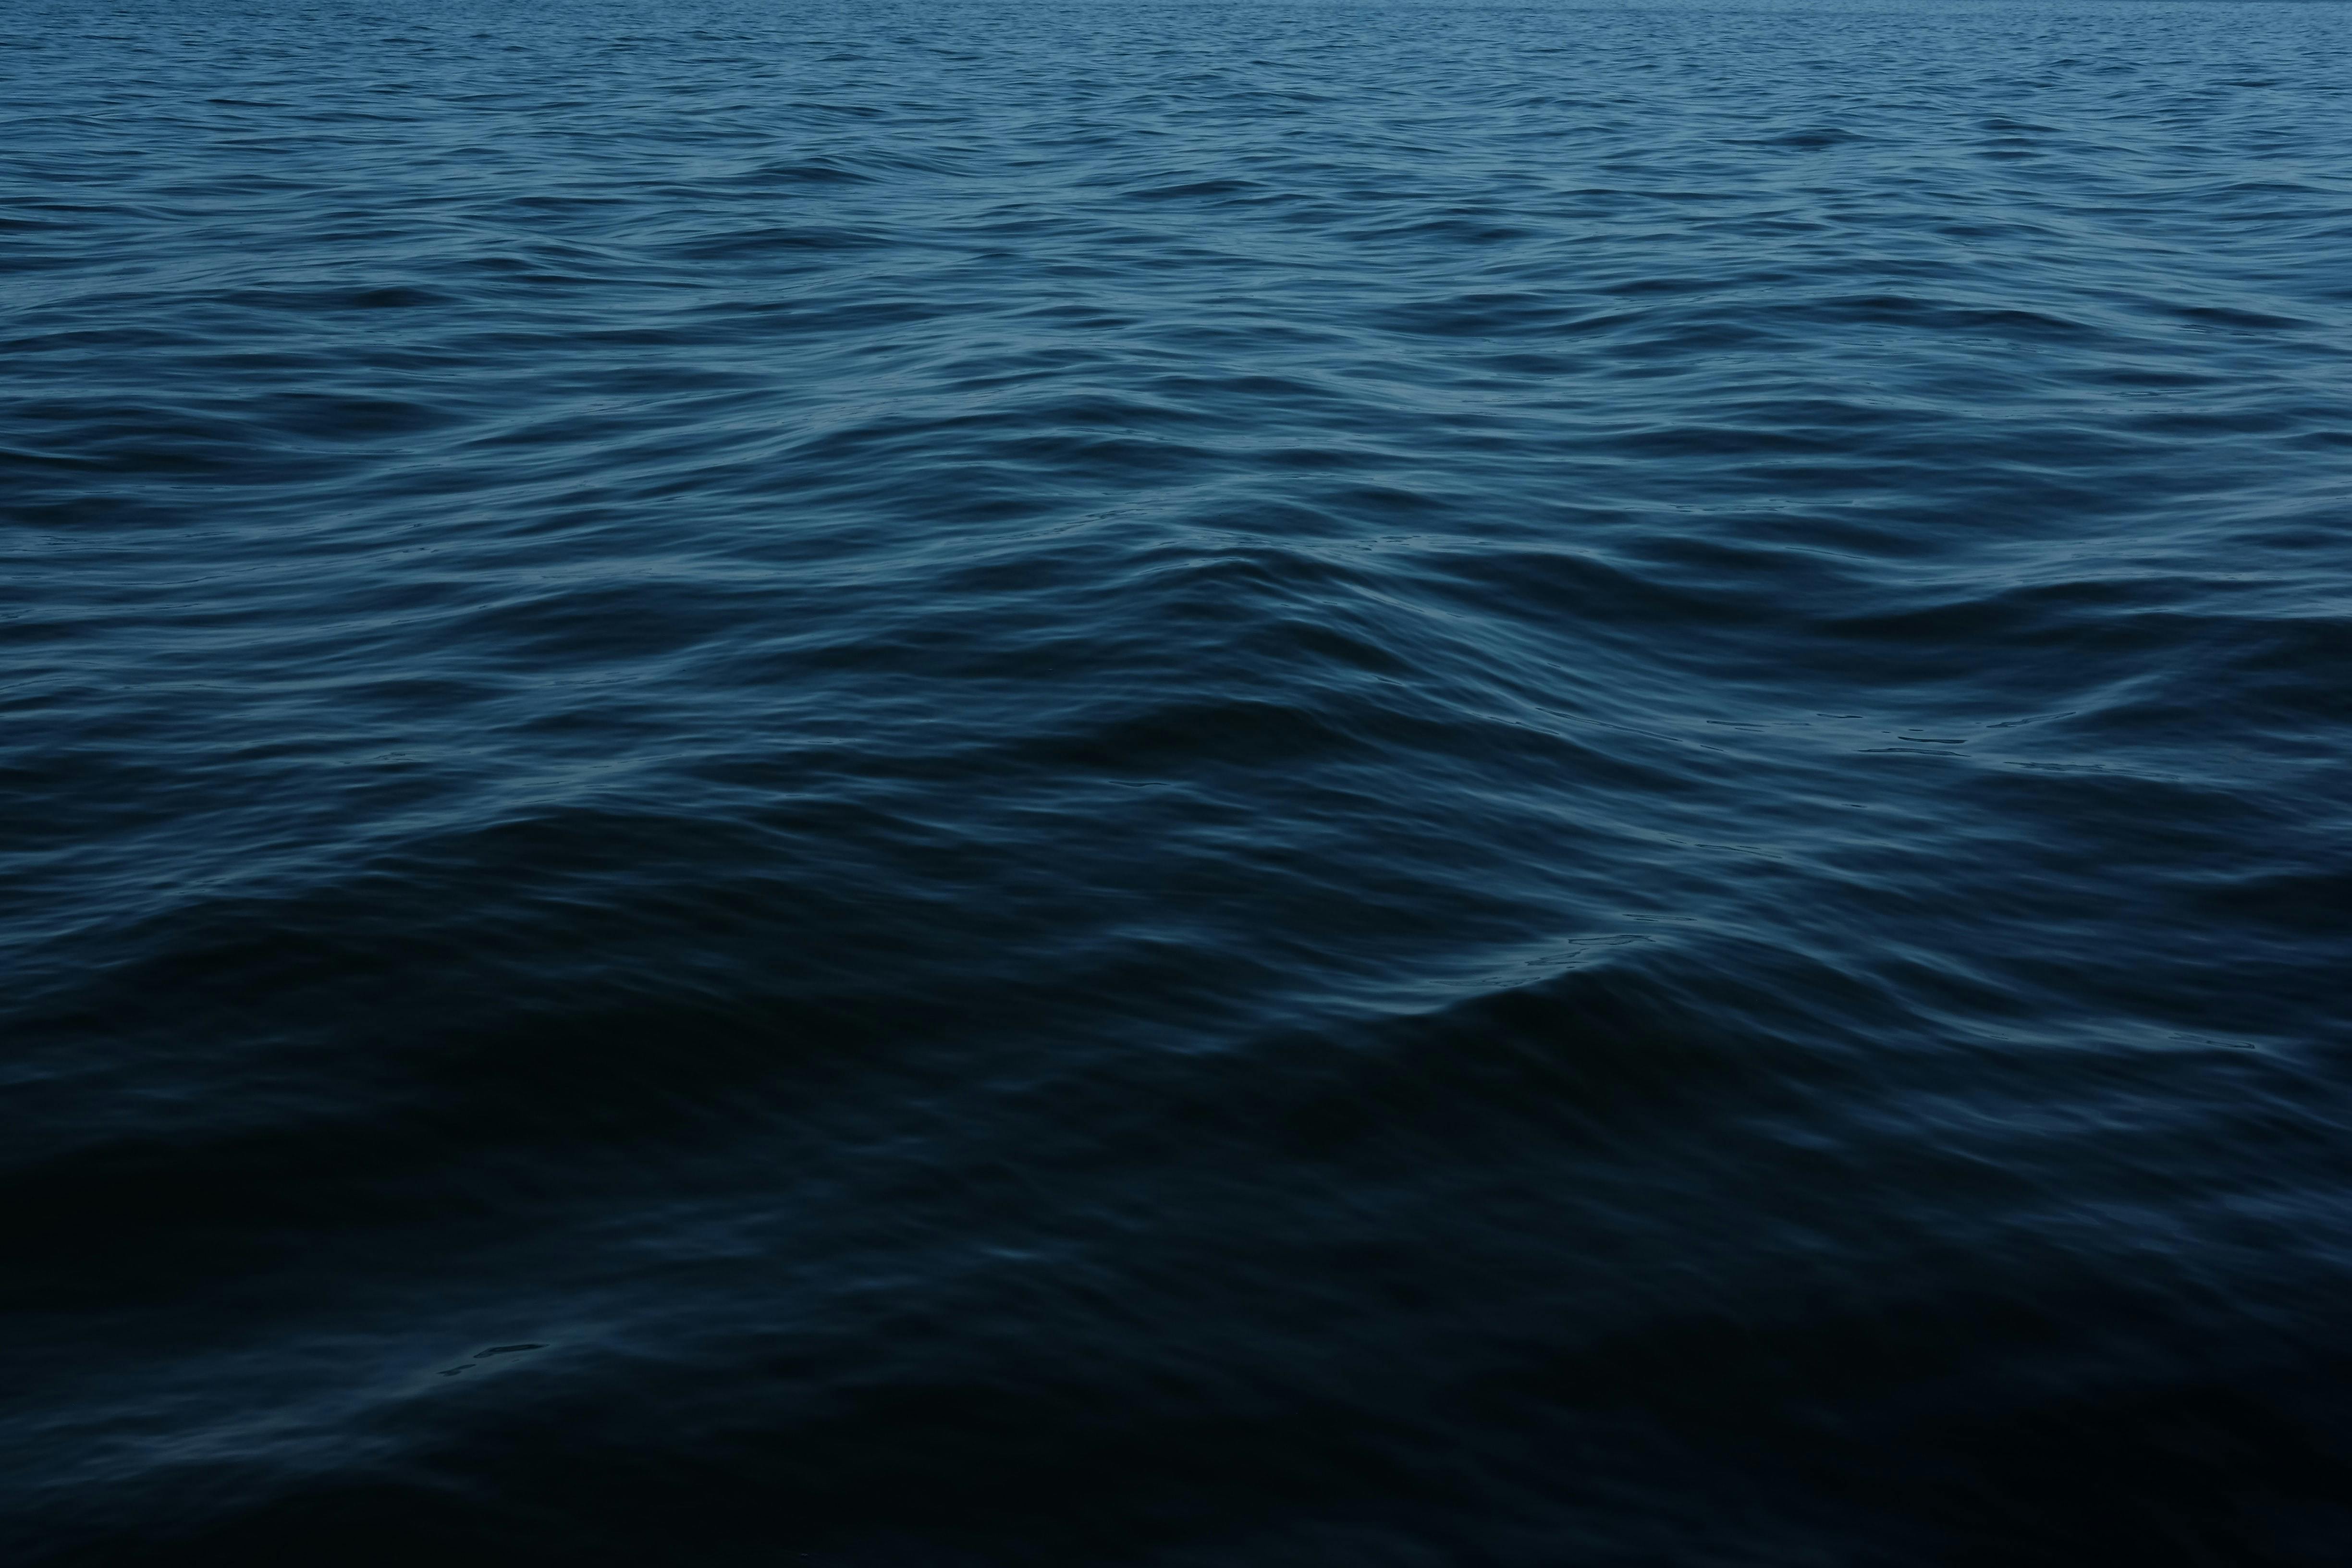 Background image of ocean